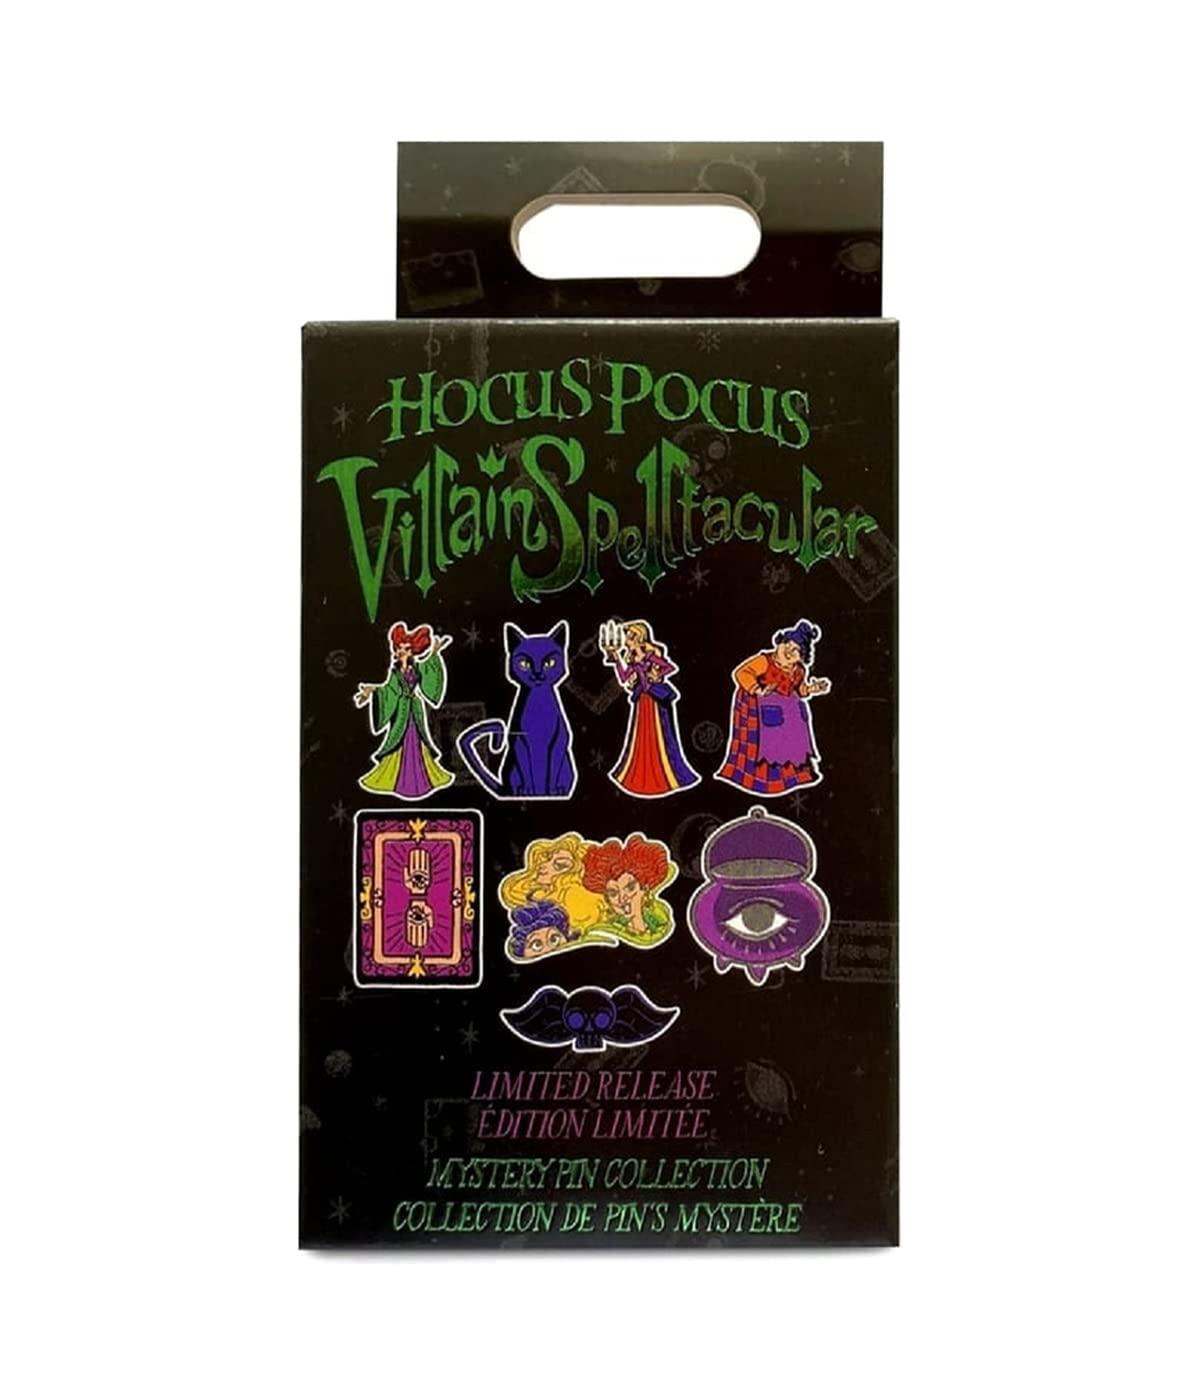 Hocus Pocus Villain Spelltacular Mystery Pin Set Limited Release